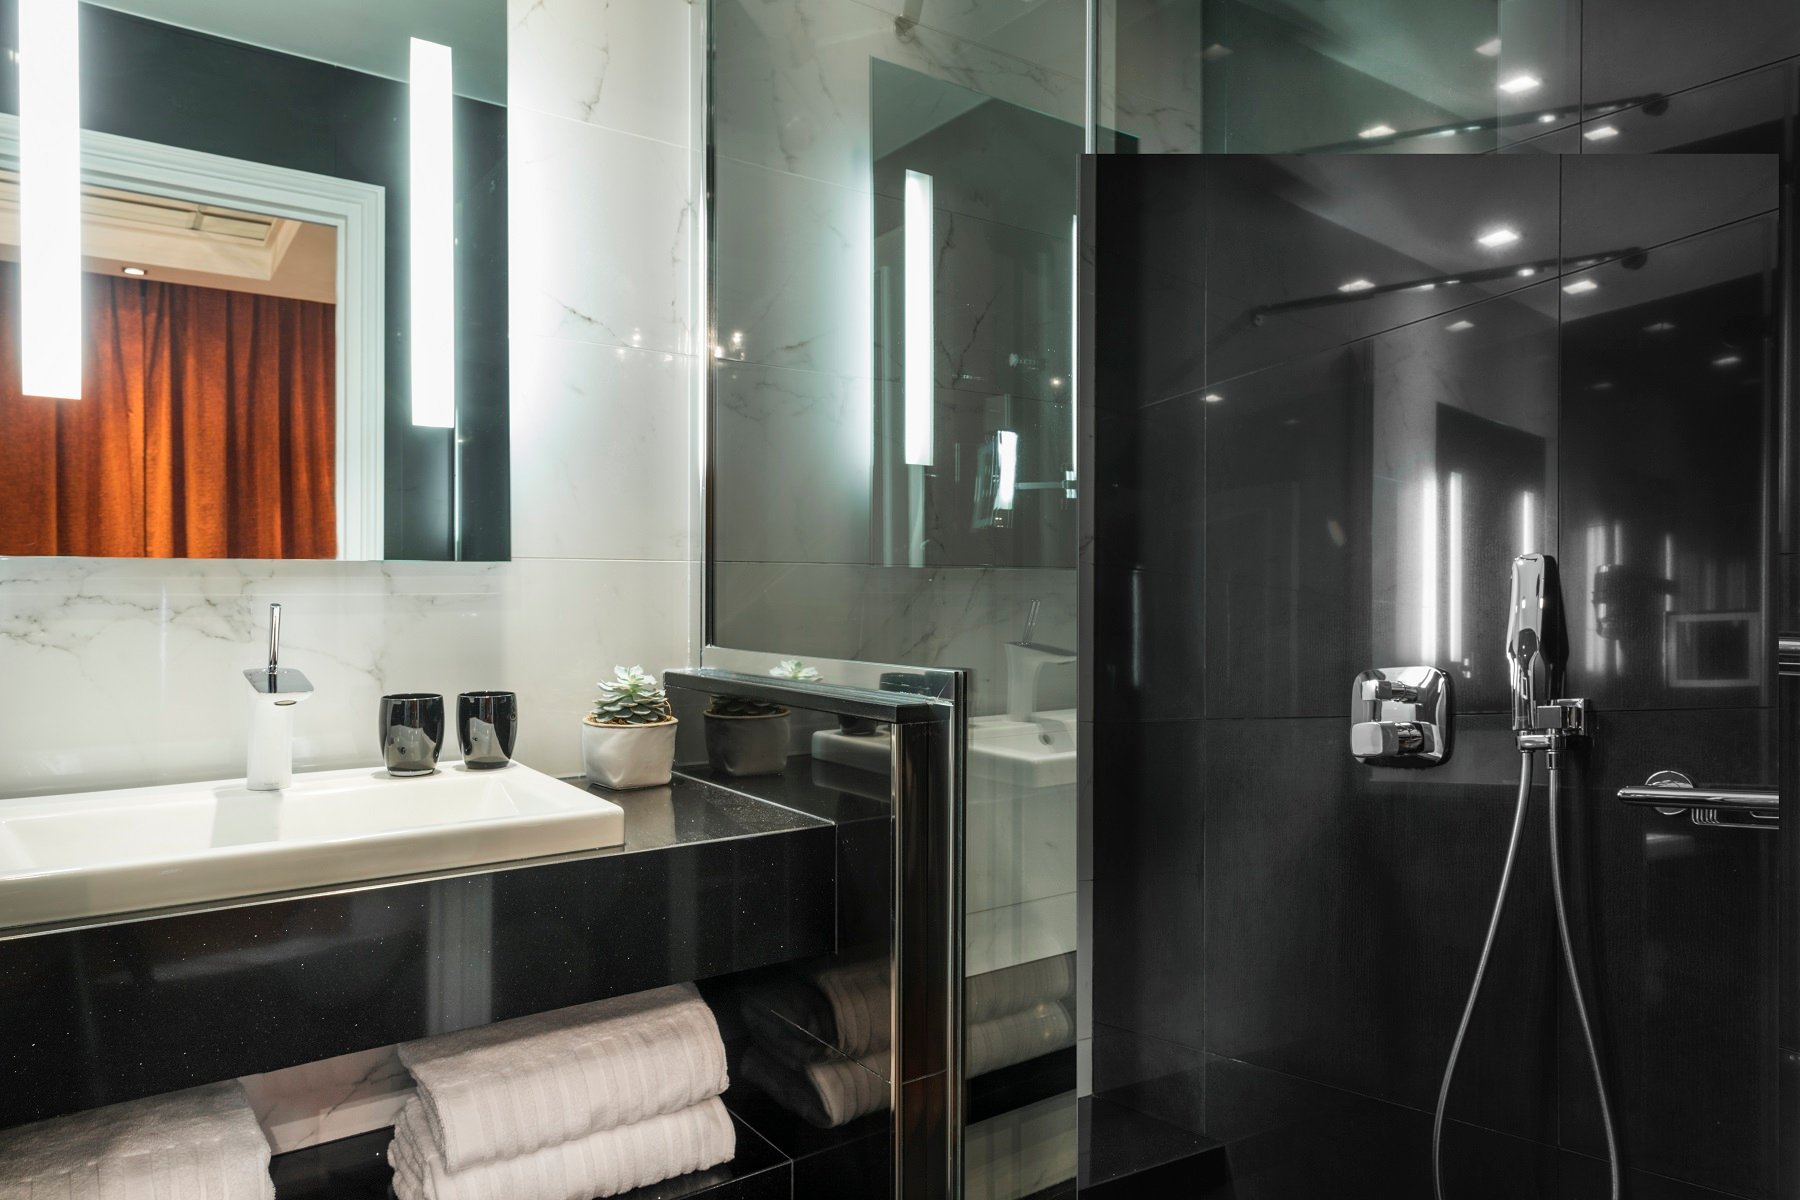 Maison Albar Hotels Le Champs-Elysées bathroom executive room